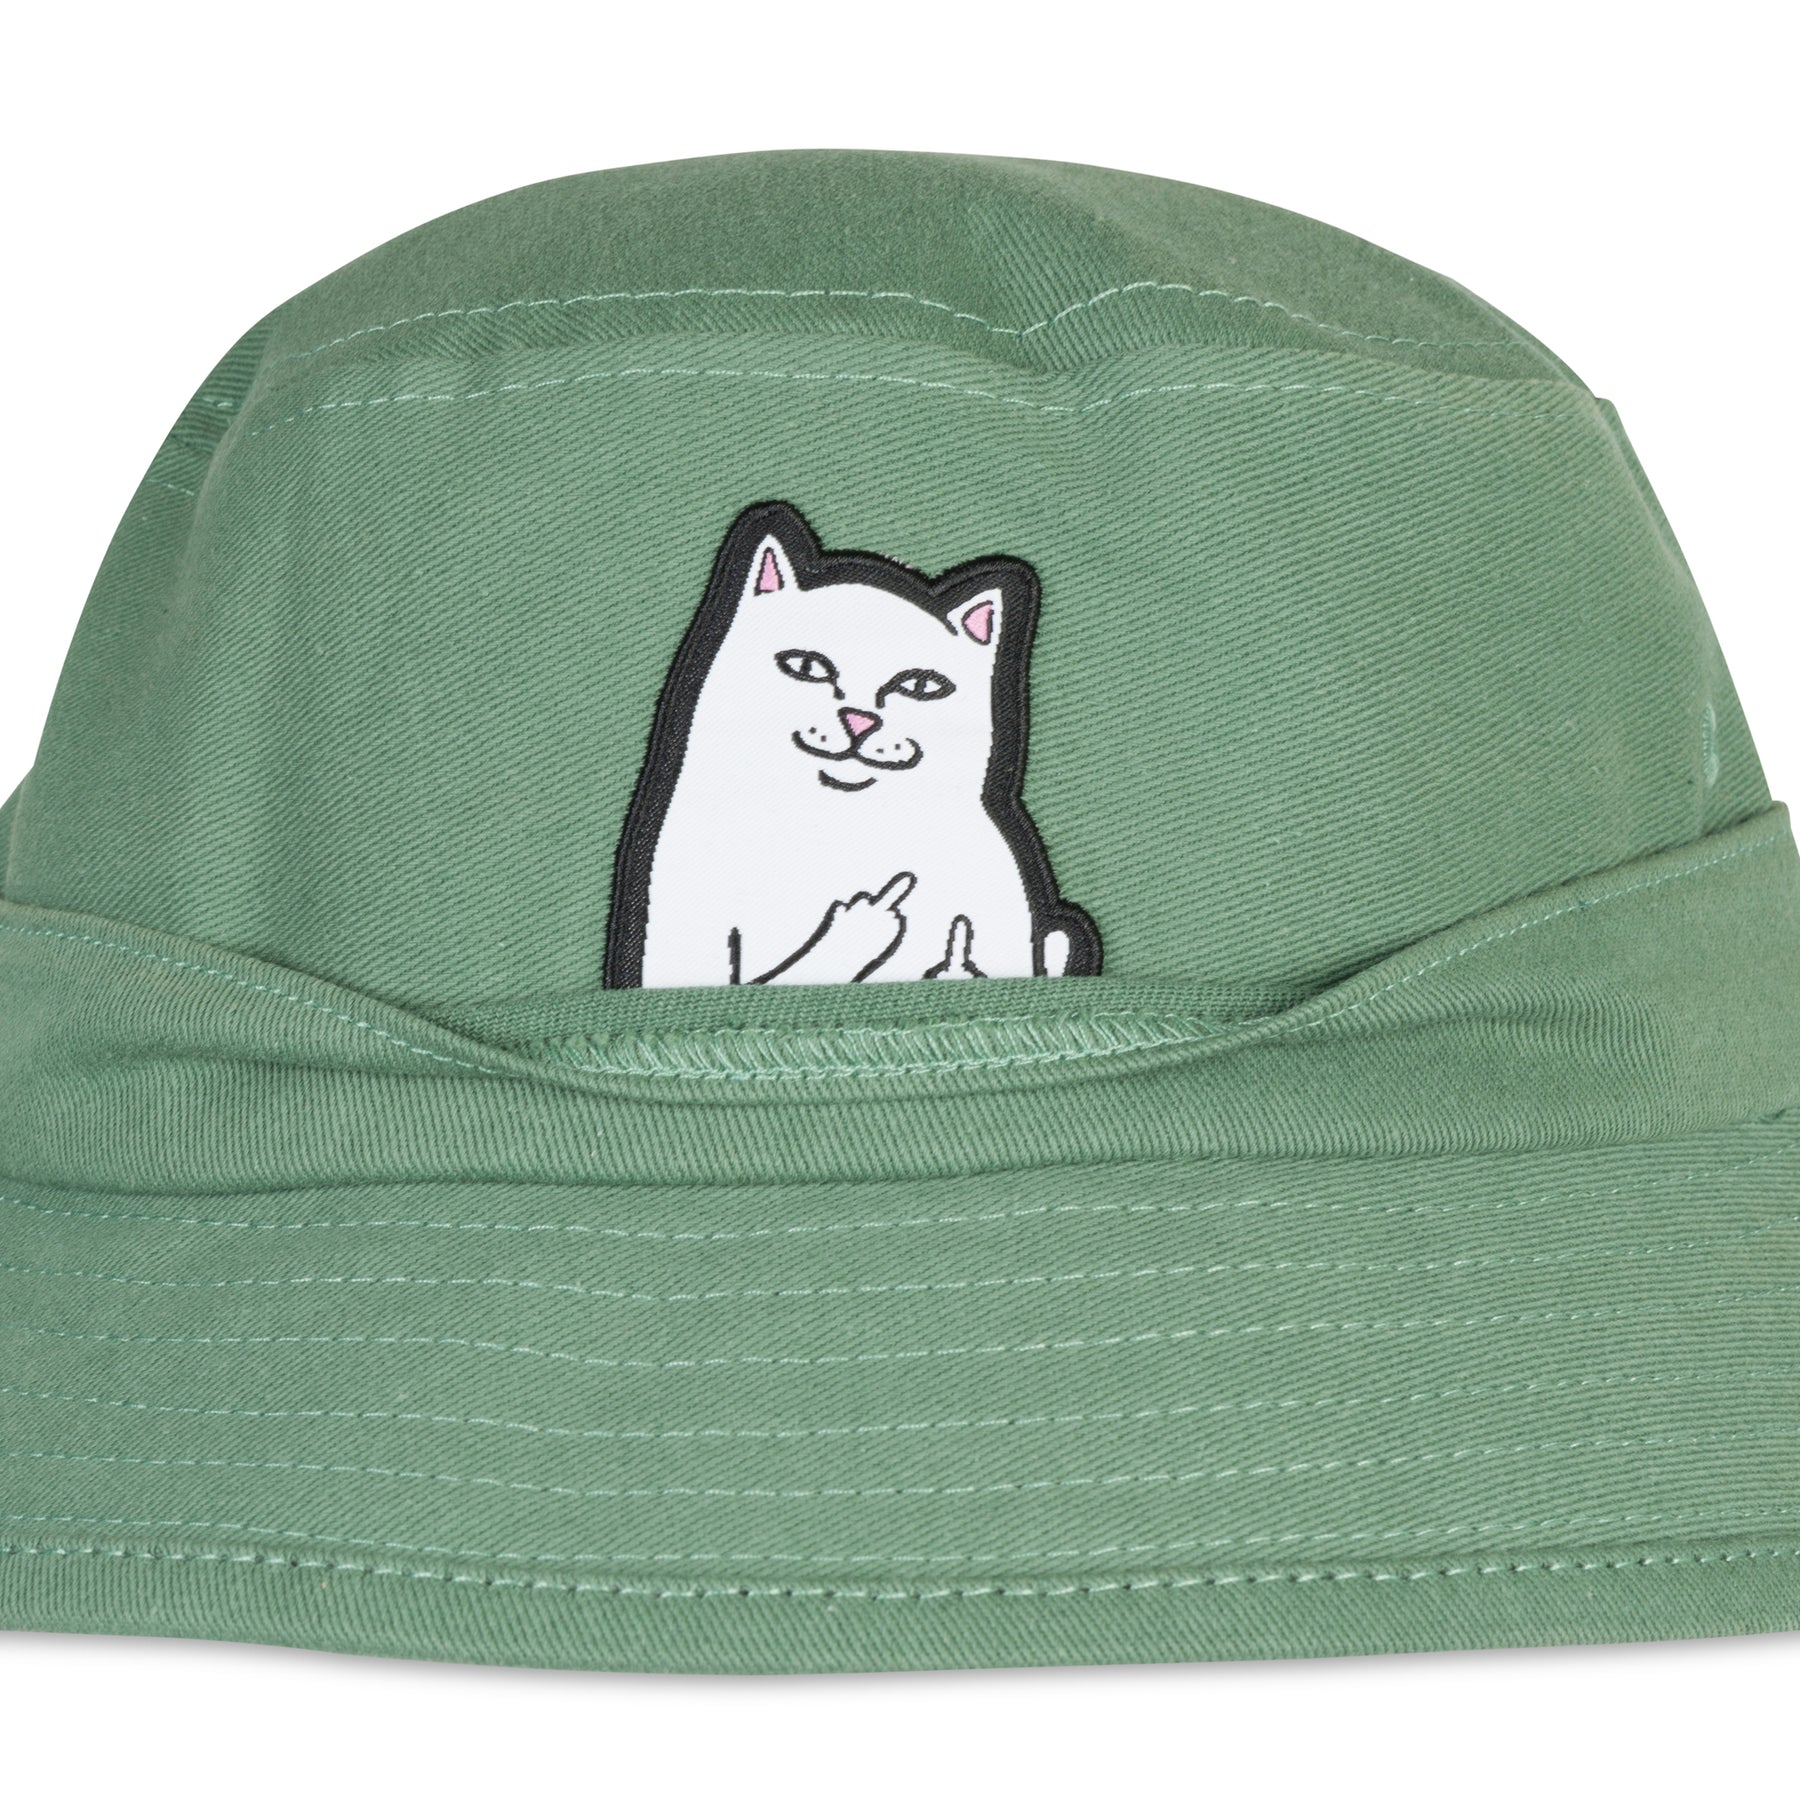 Lord Nermal Bucket Hat (Olive)